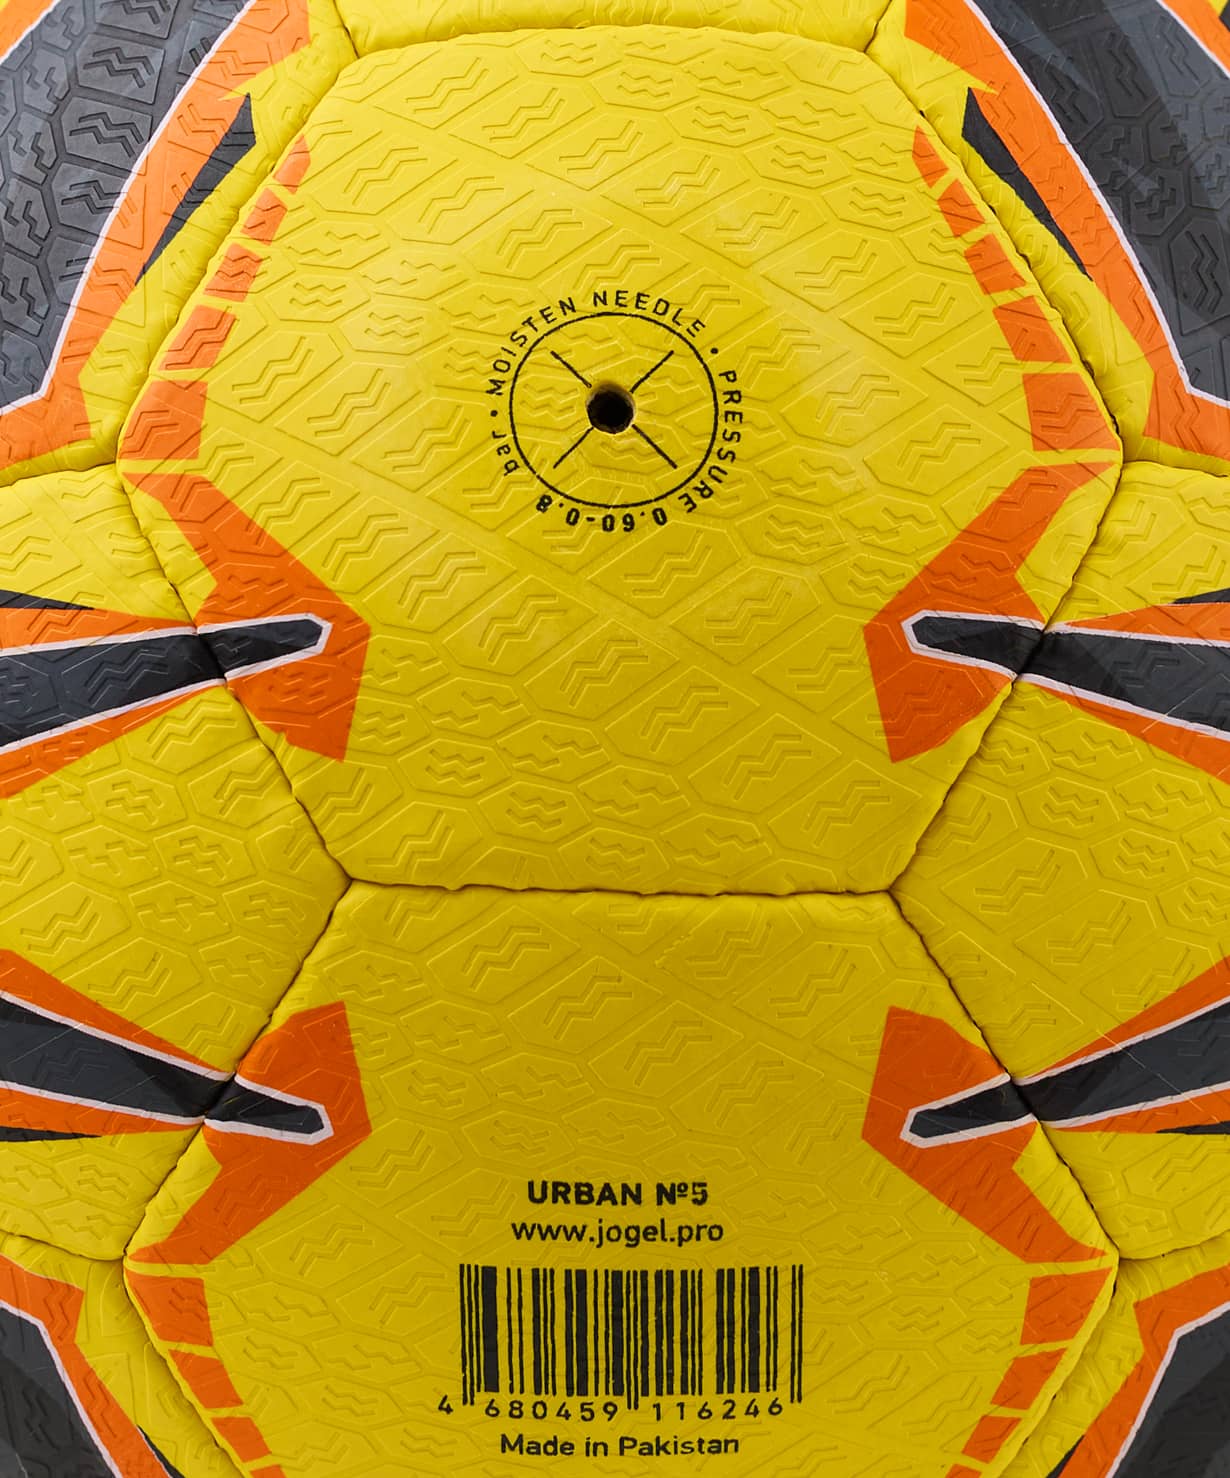 фото Jögel Urban мяч футбольный размер 5 желтый Football-54 